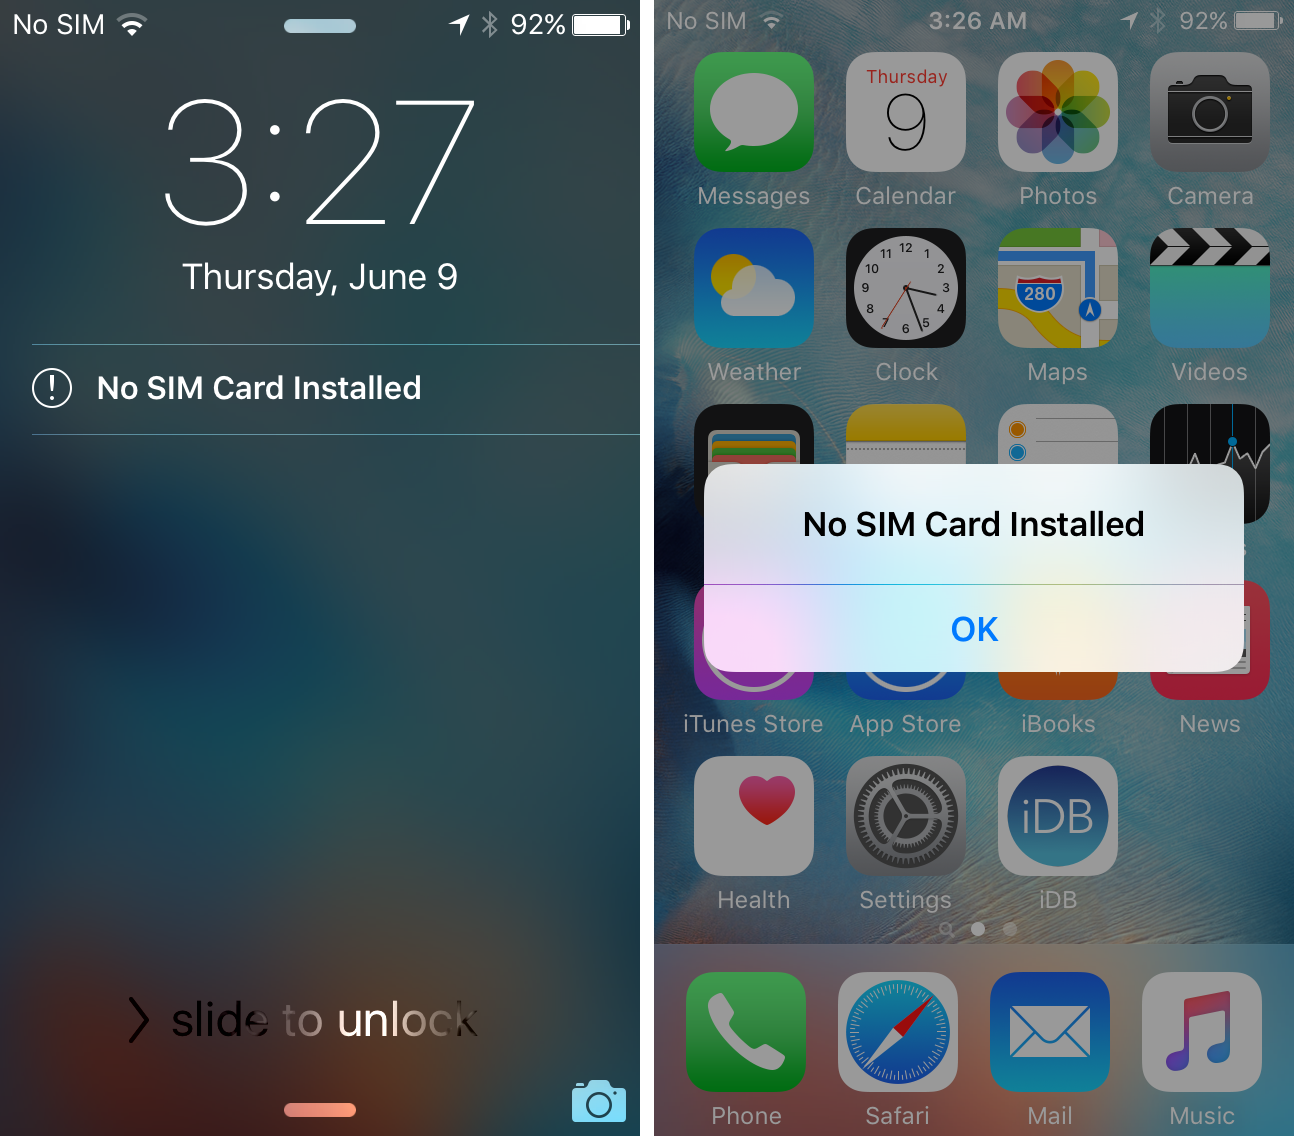 CoySIM No SIM Alerts iPhone